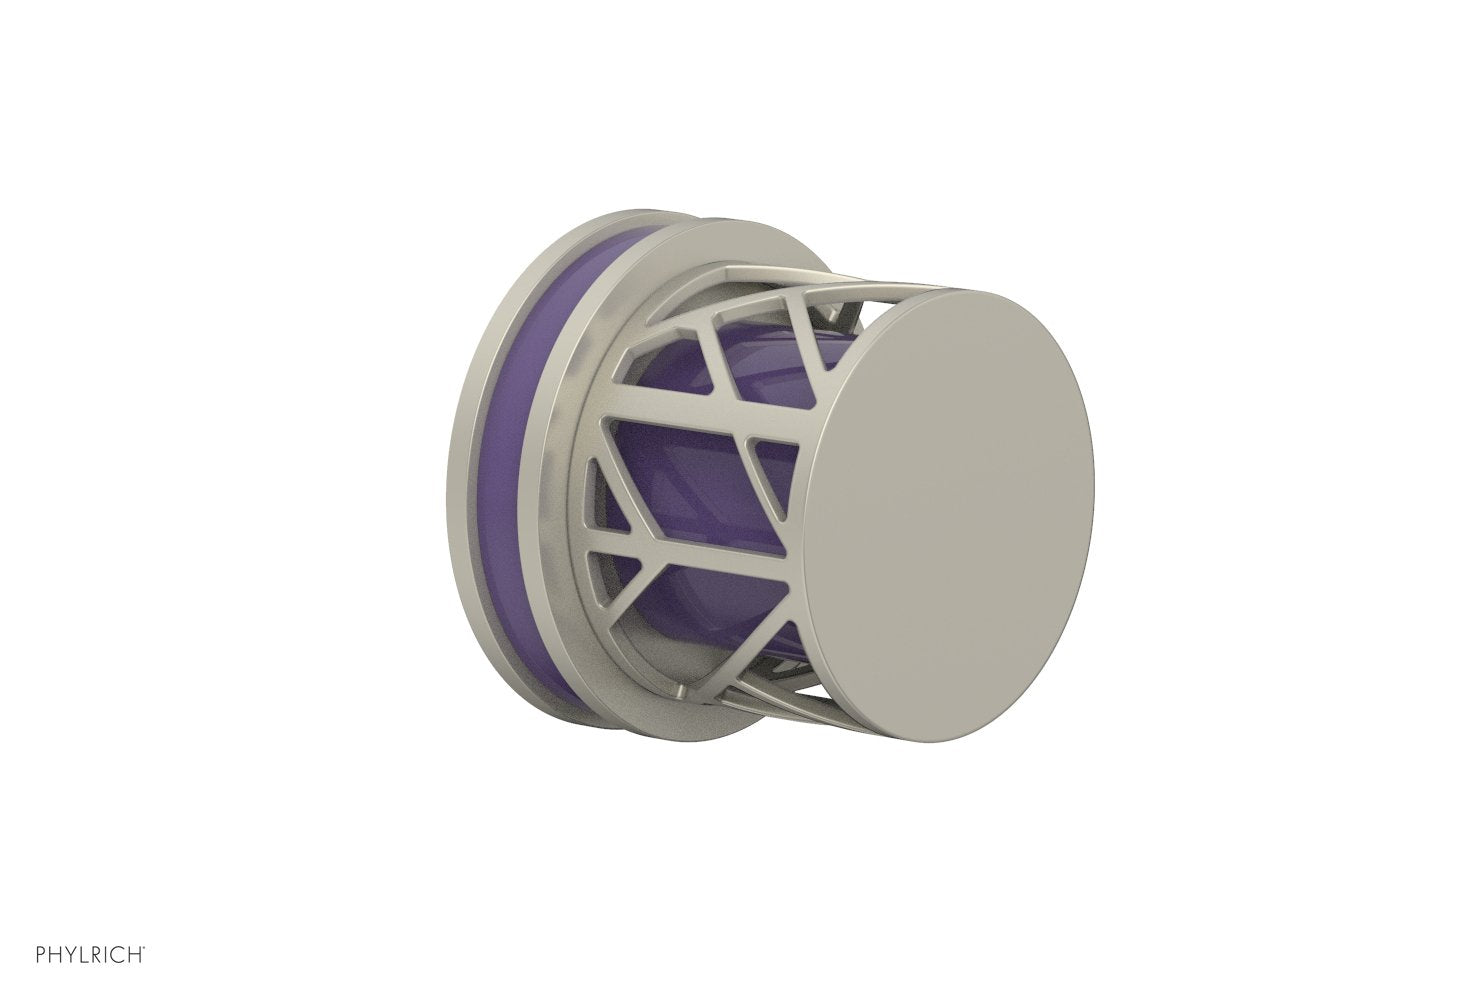 Phylrich JOLIE Volume Control/Diverter Trim - Round Handle with "Purple" Accents